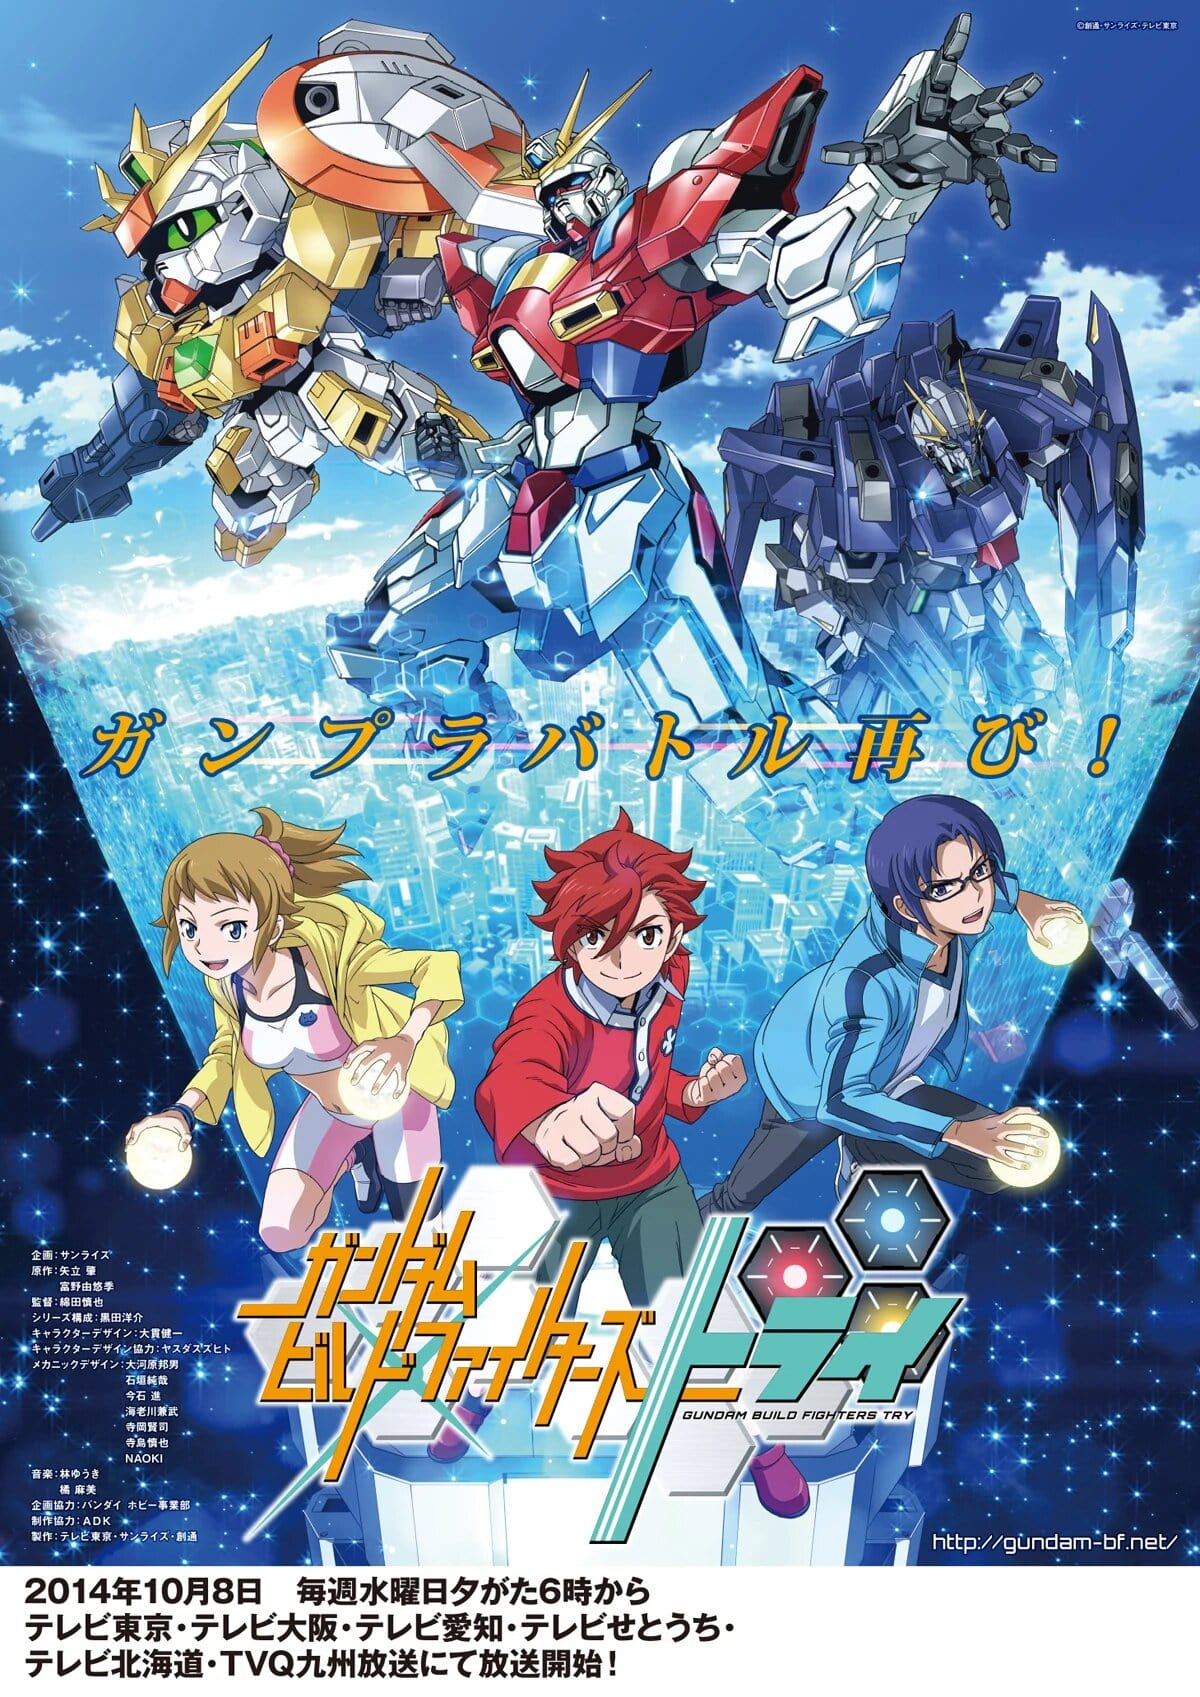 Gundam_Build_Fighters_Try_Poster-min.jpg